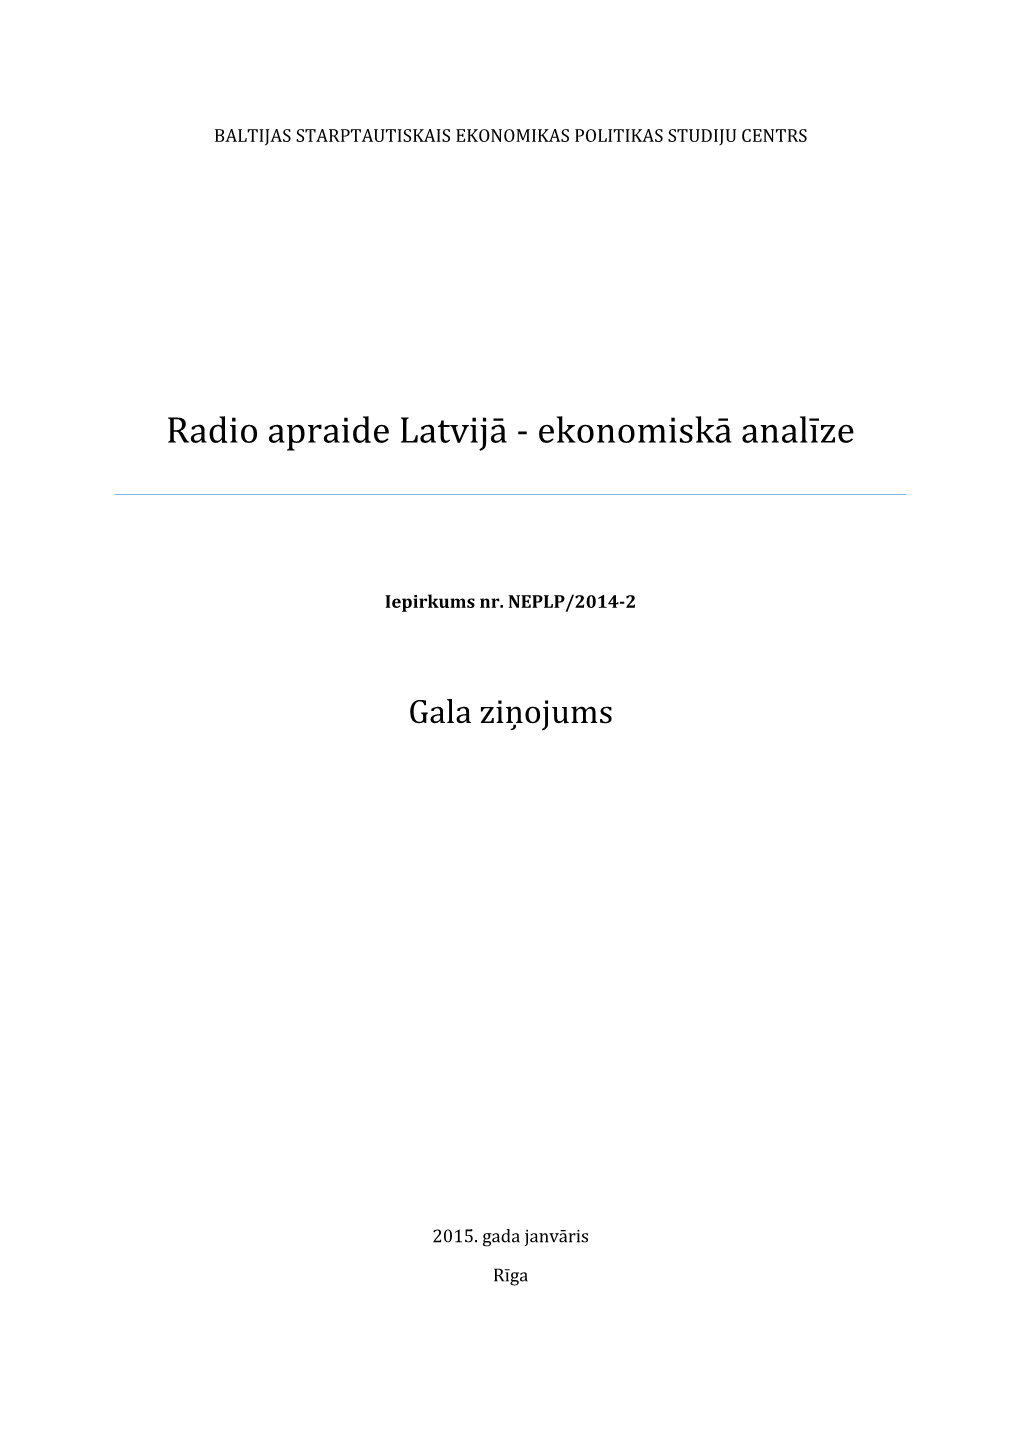 Radio Apraide Latvijā - Ekonomiskā Analīze